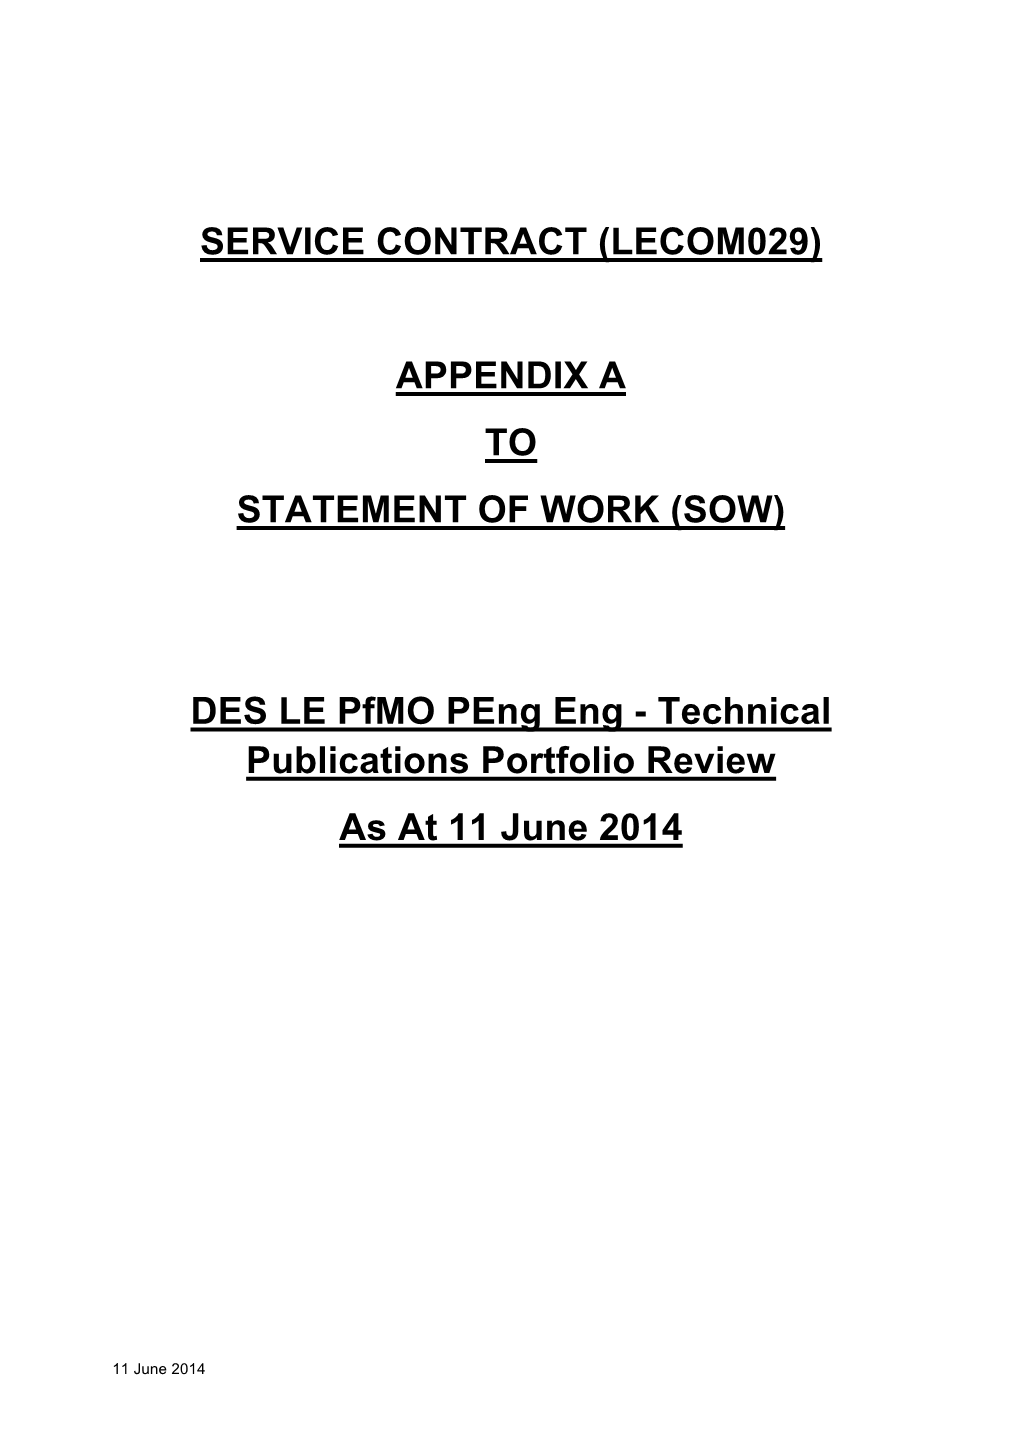 Service Contract (Lecom029)